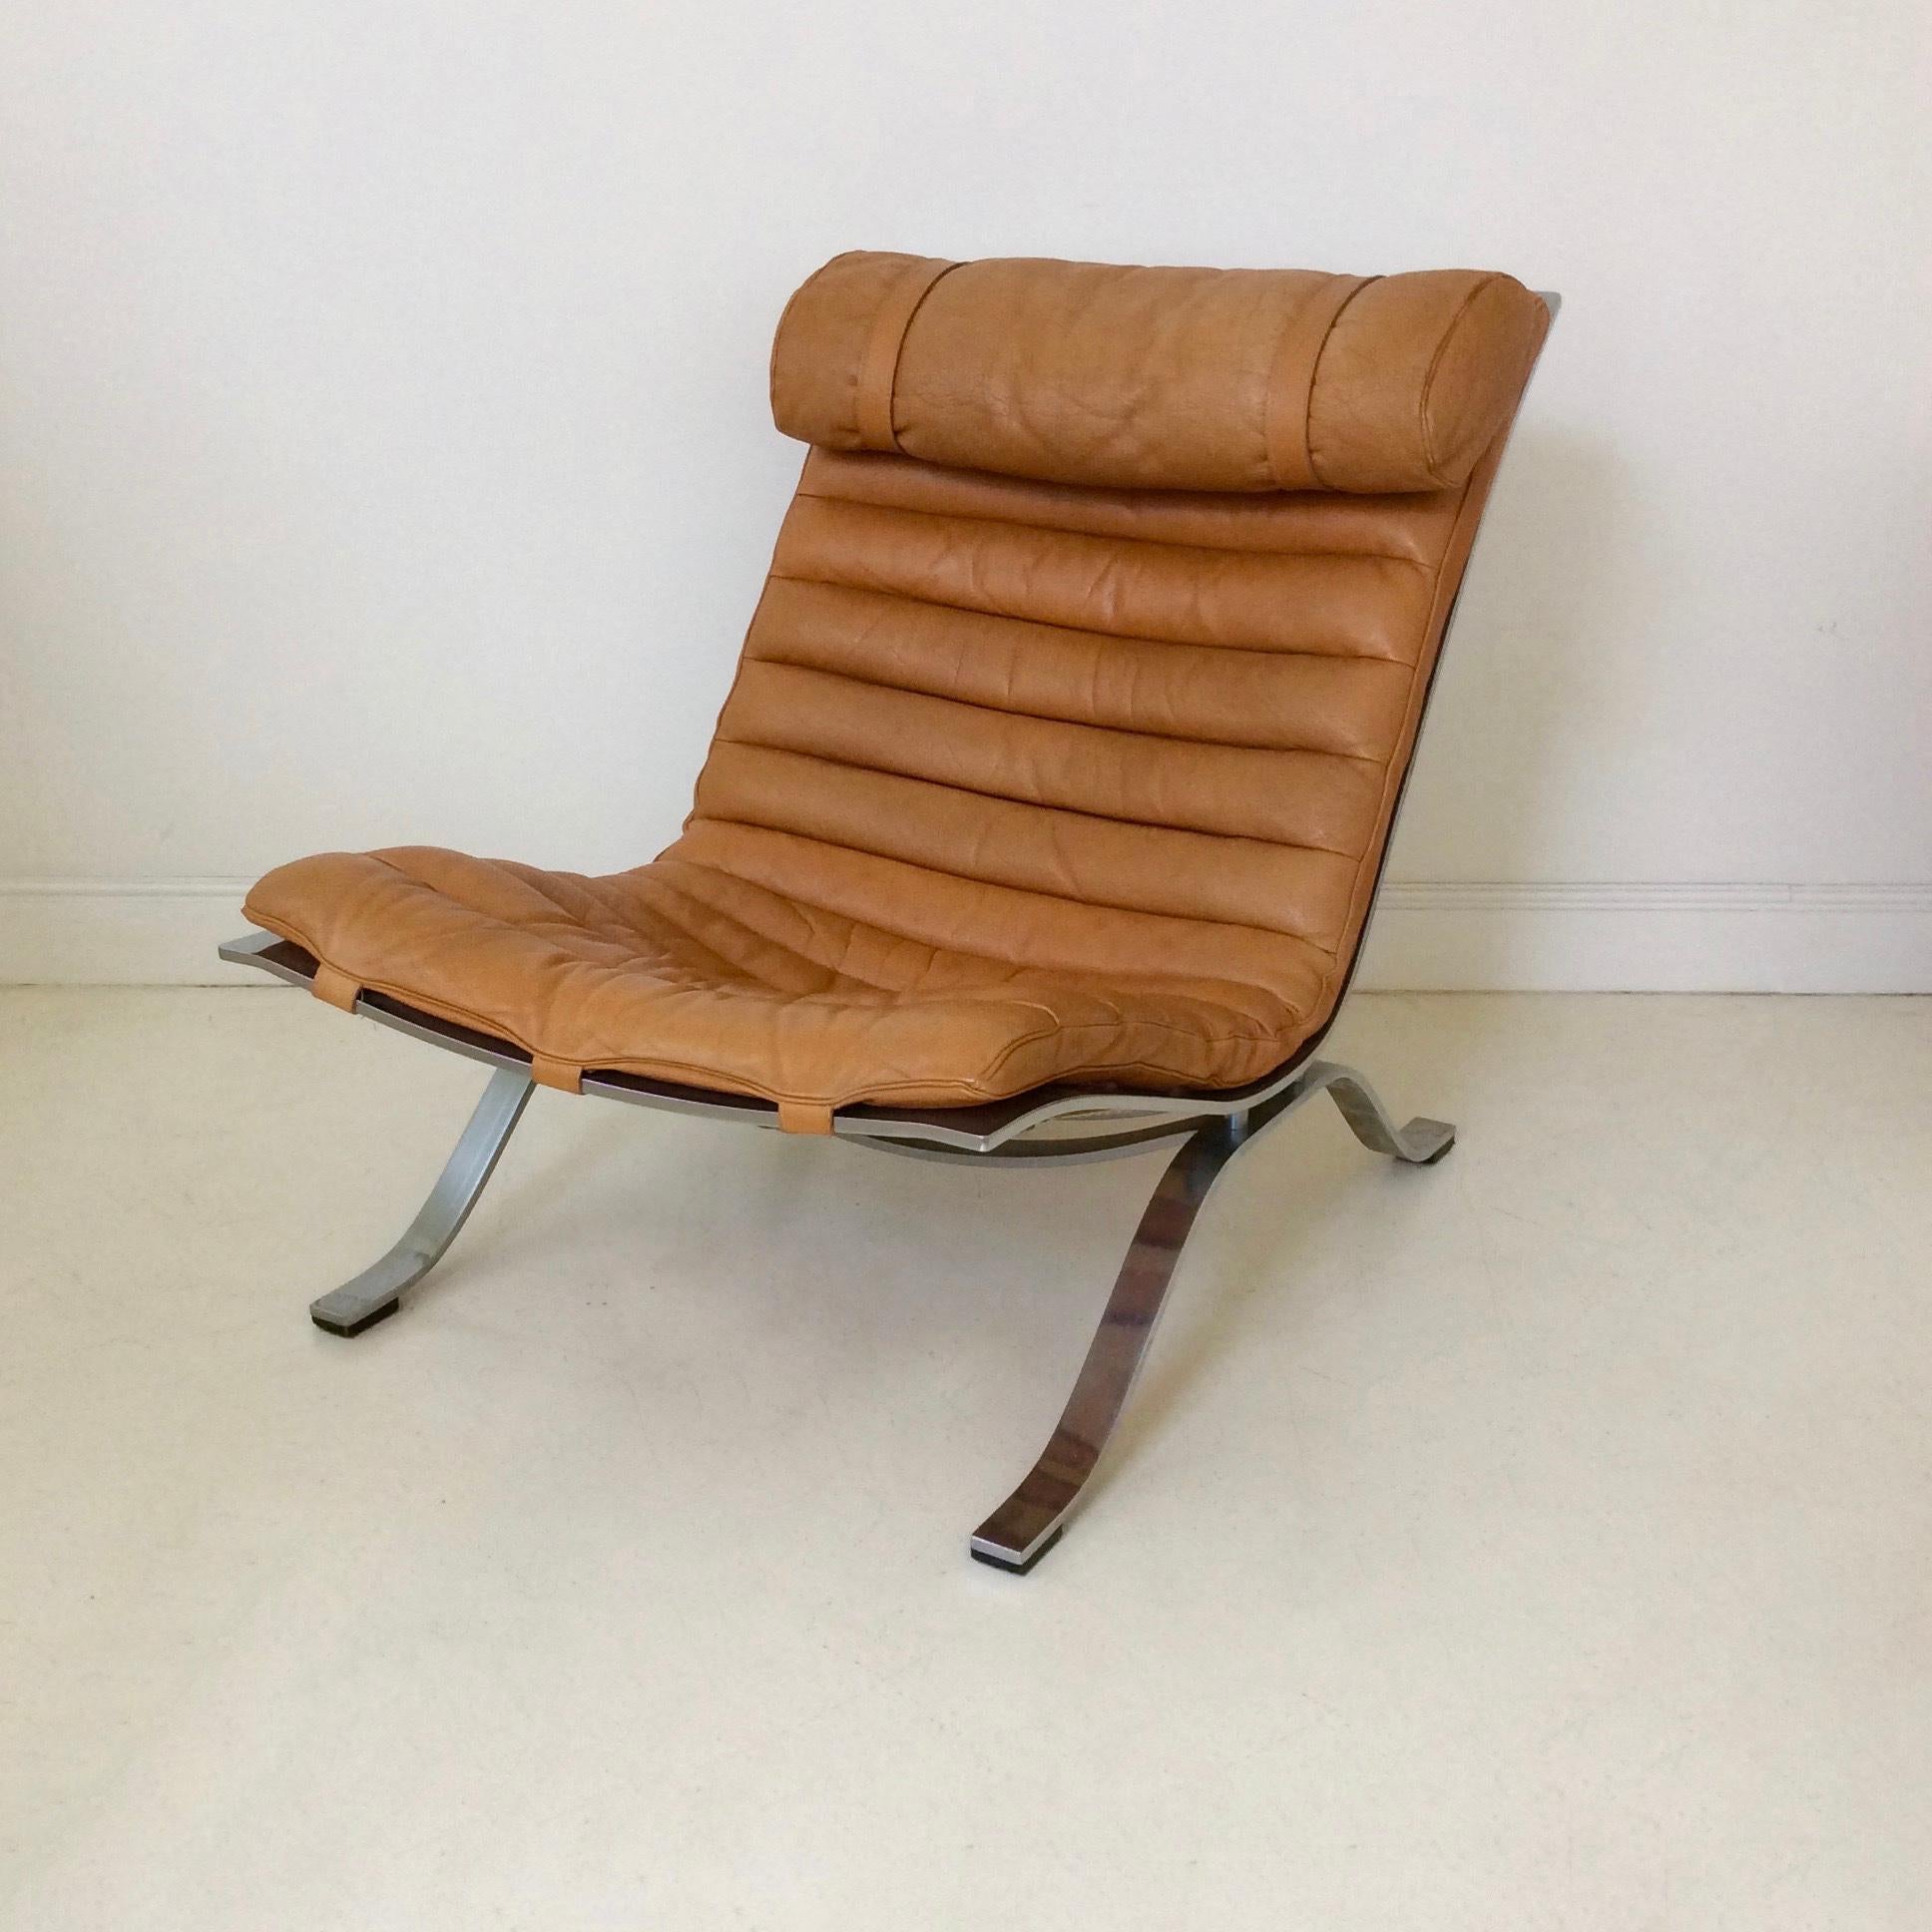 Arne Norell Ari Lounge Chair, circa 1965, Sweden (Stahl)